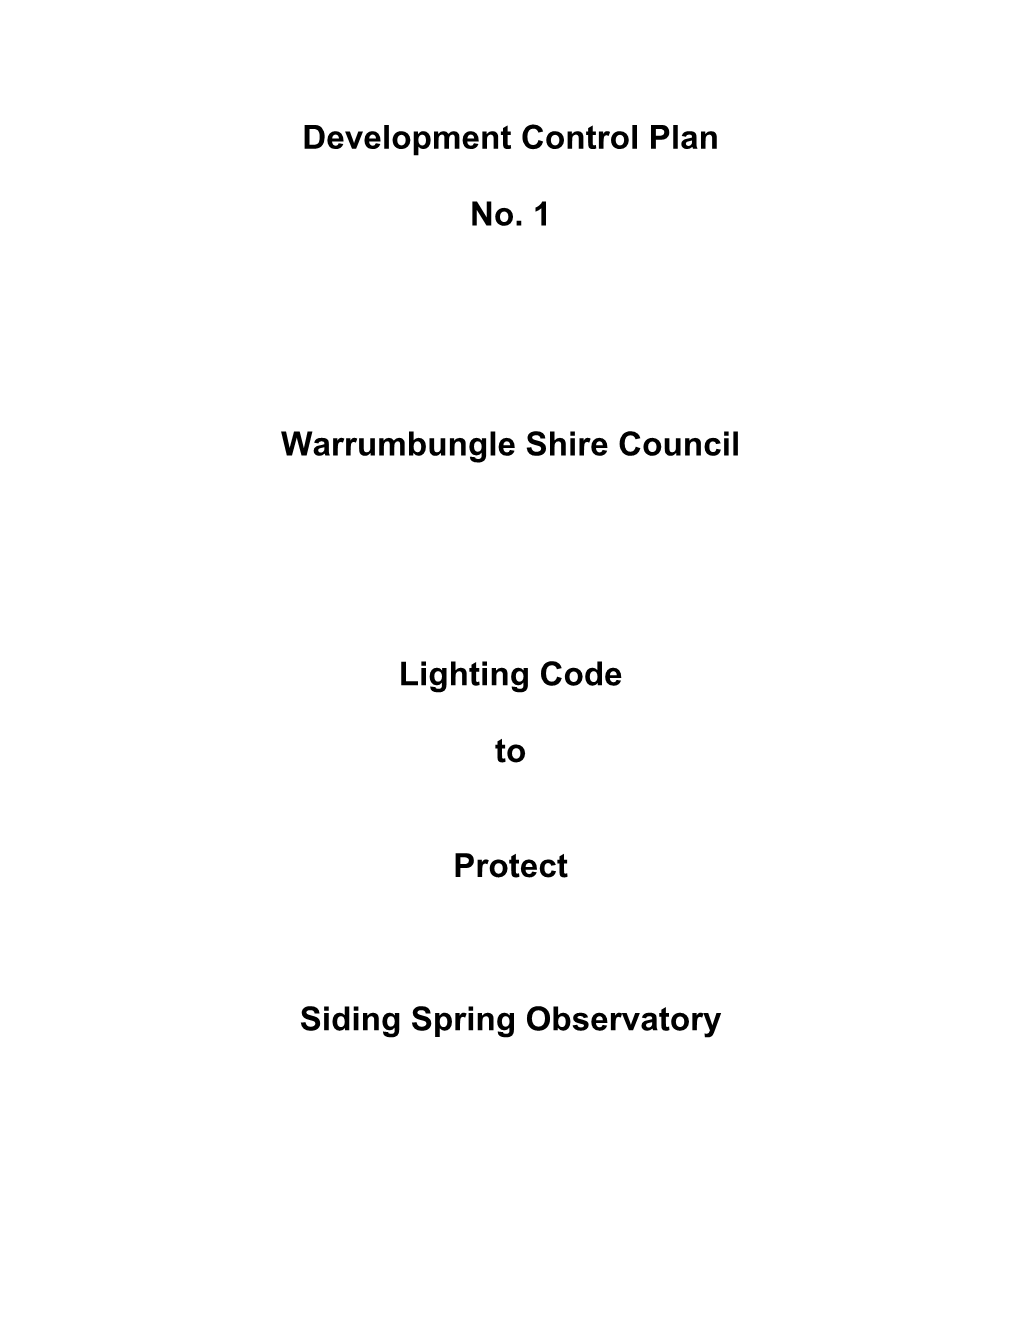 Development Control Plan No. 1 Warrumbungle Shire Council